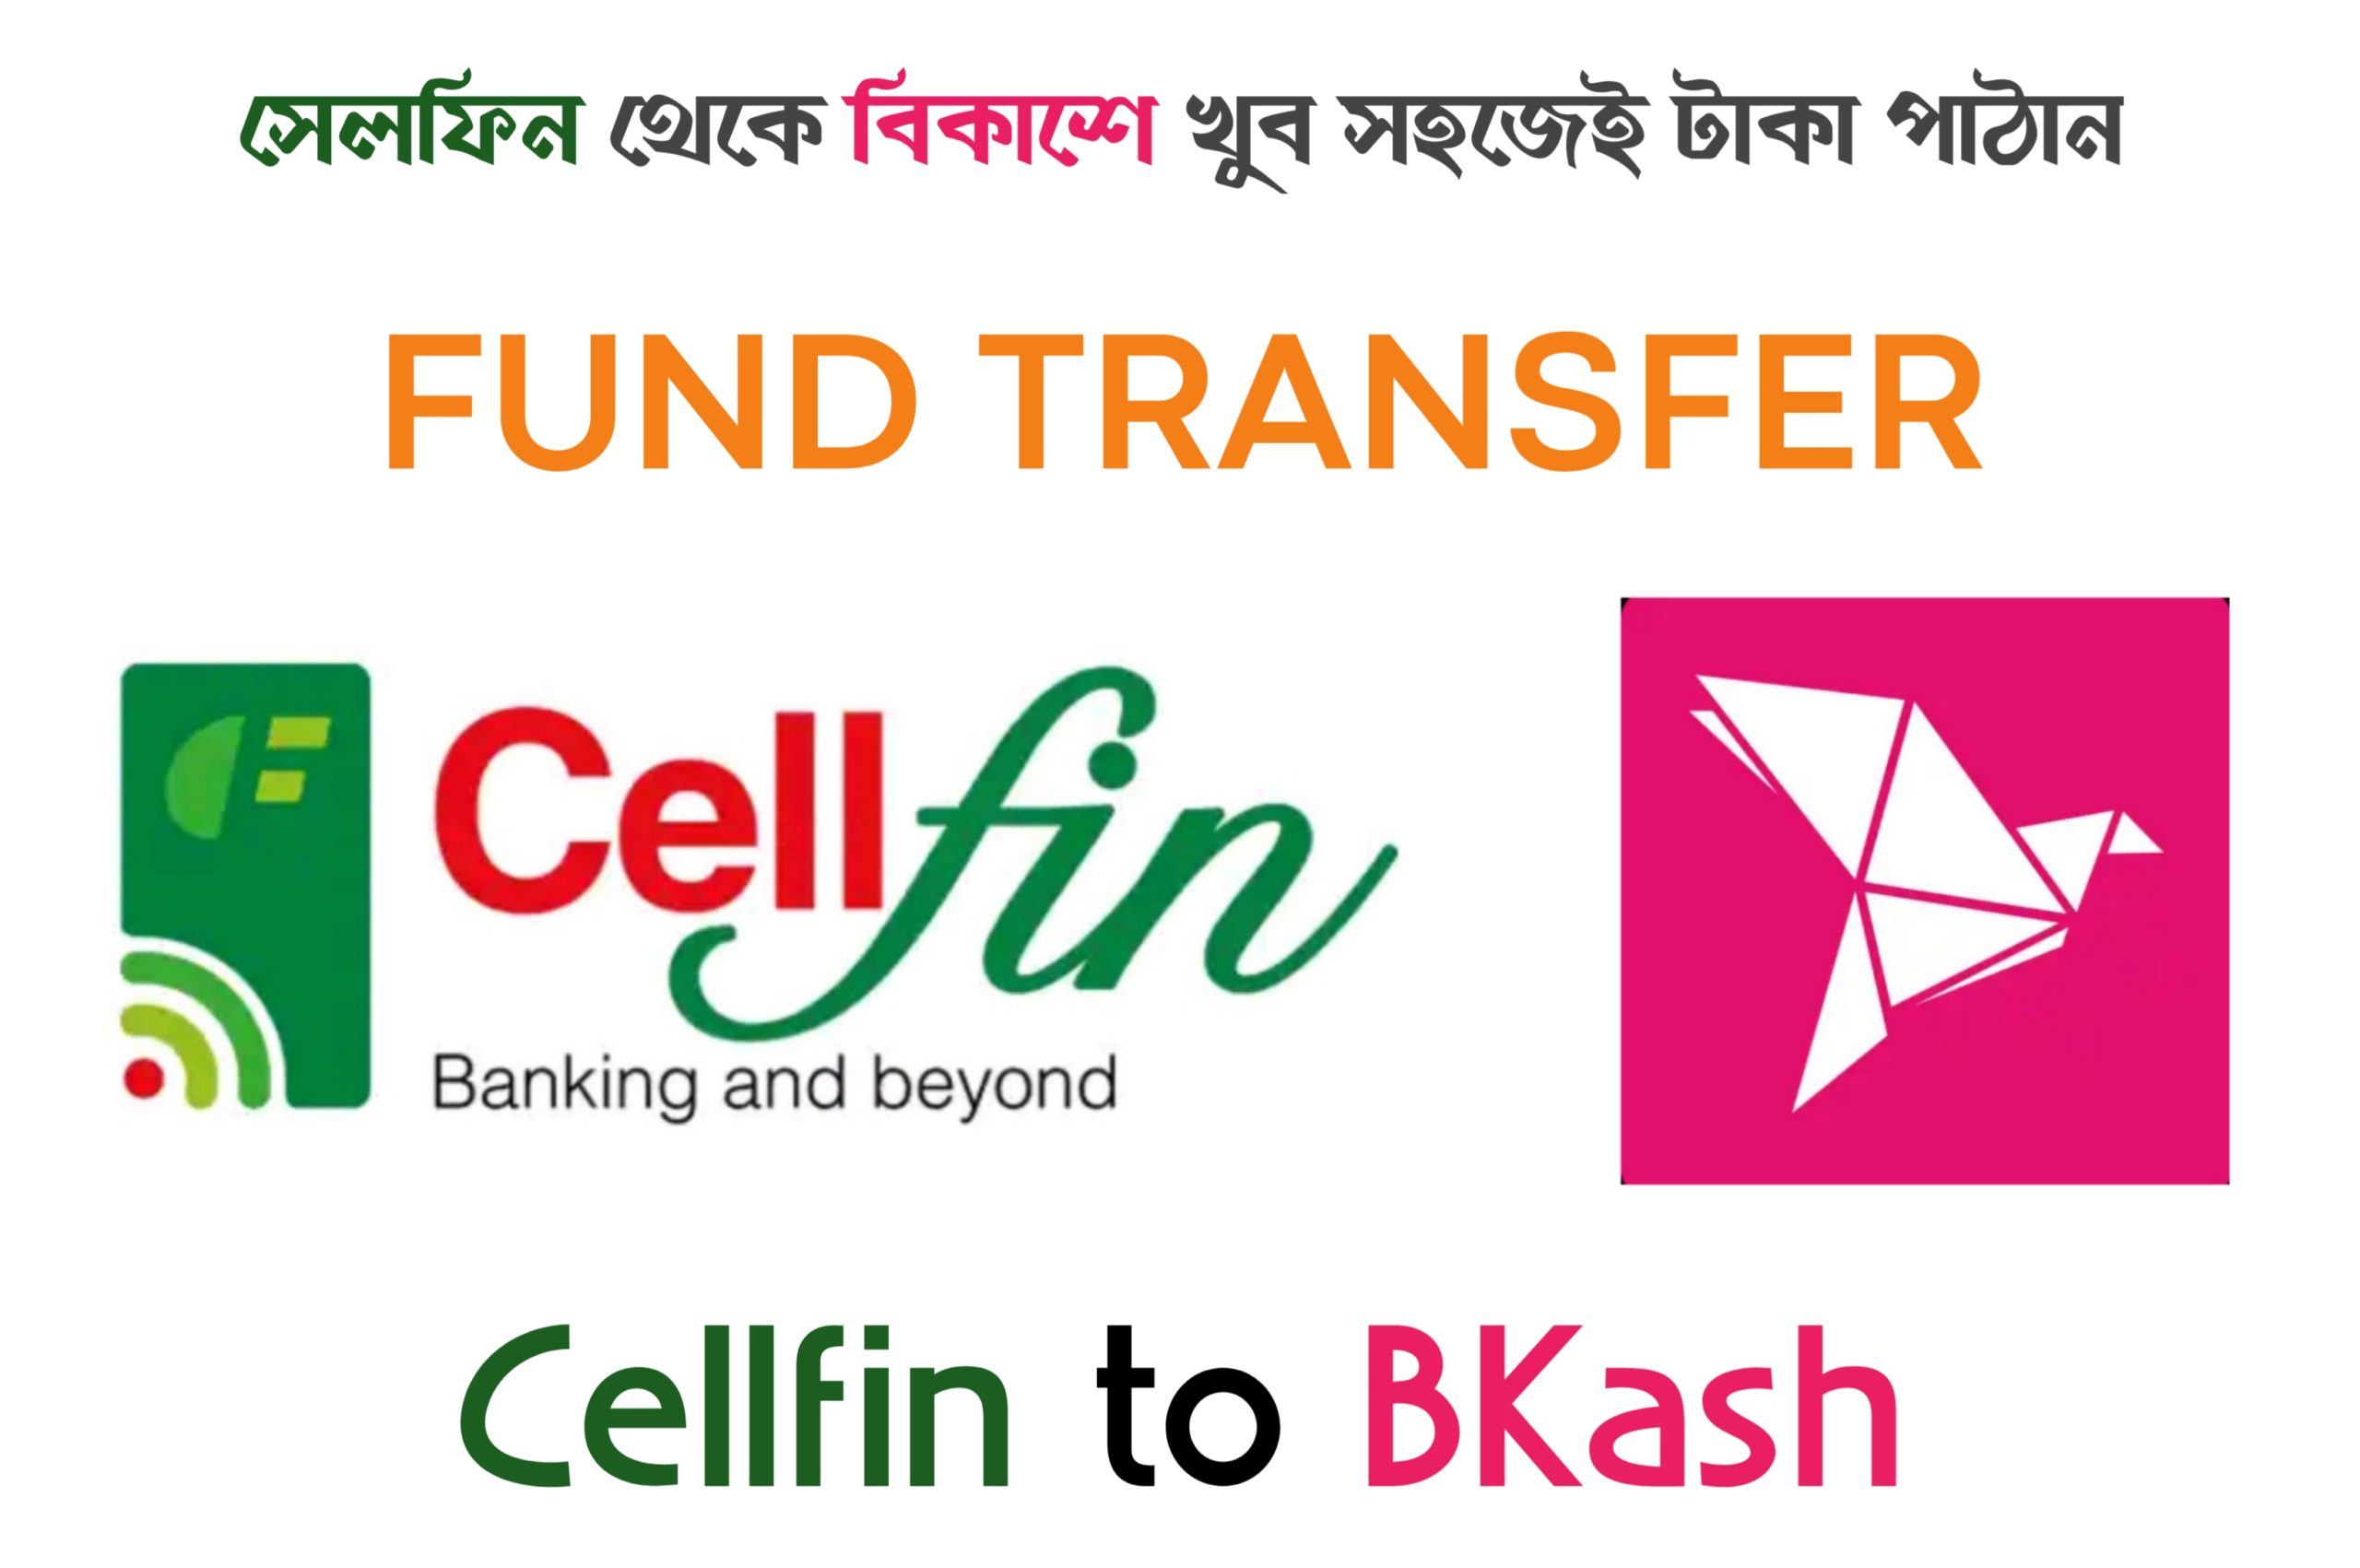 Cellfin to Bkash Fund Transfer ।। সেলফিন থেকে বিকাশে টাকা পাঠান খুব সহজেই।